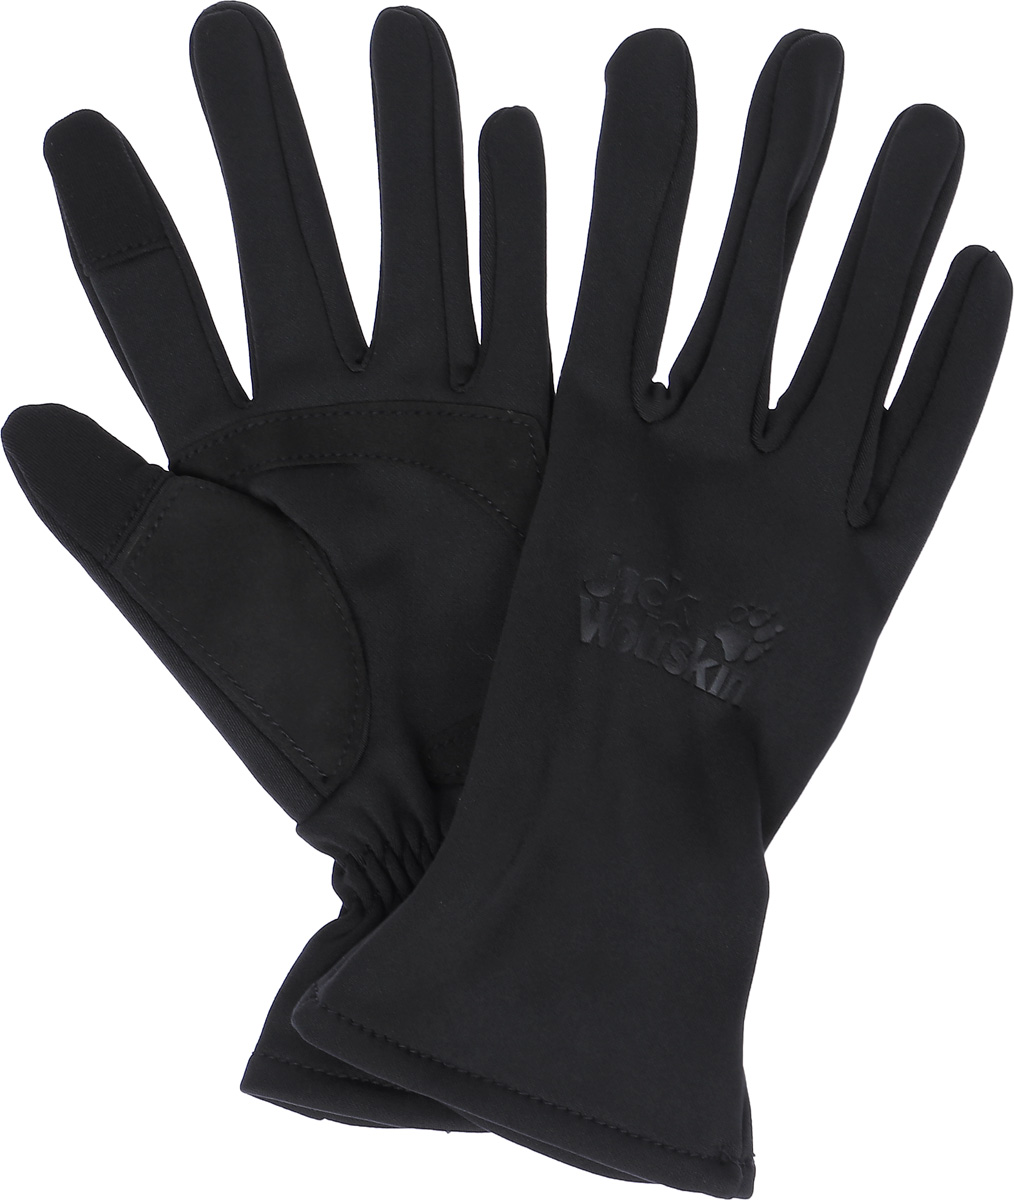 Перчатки Jack Wolfskin Dynamic Touch Glove, цвет: черный. 1903152-6000. Размер XL (9,5/10,5)